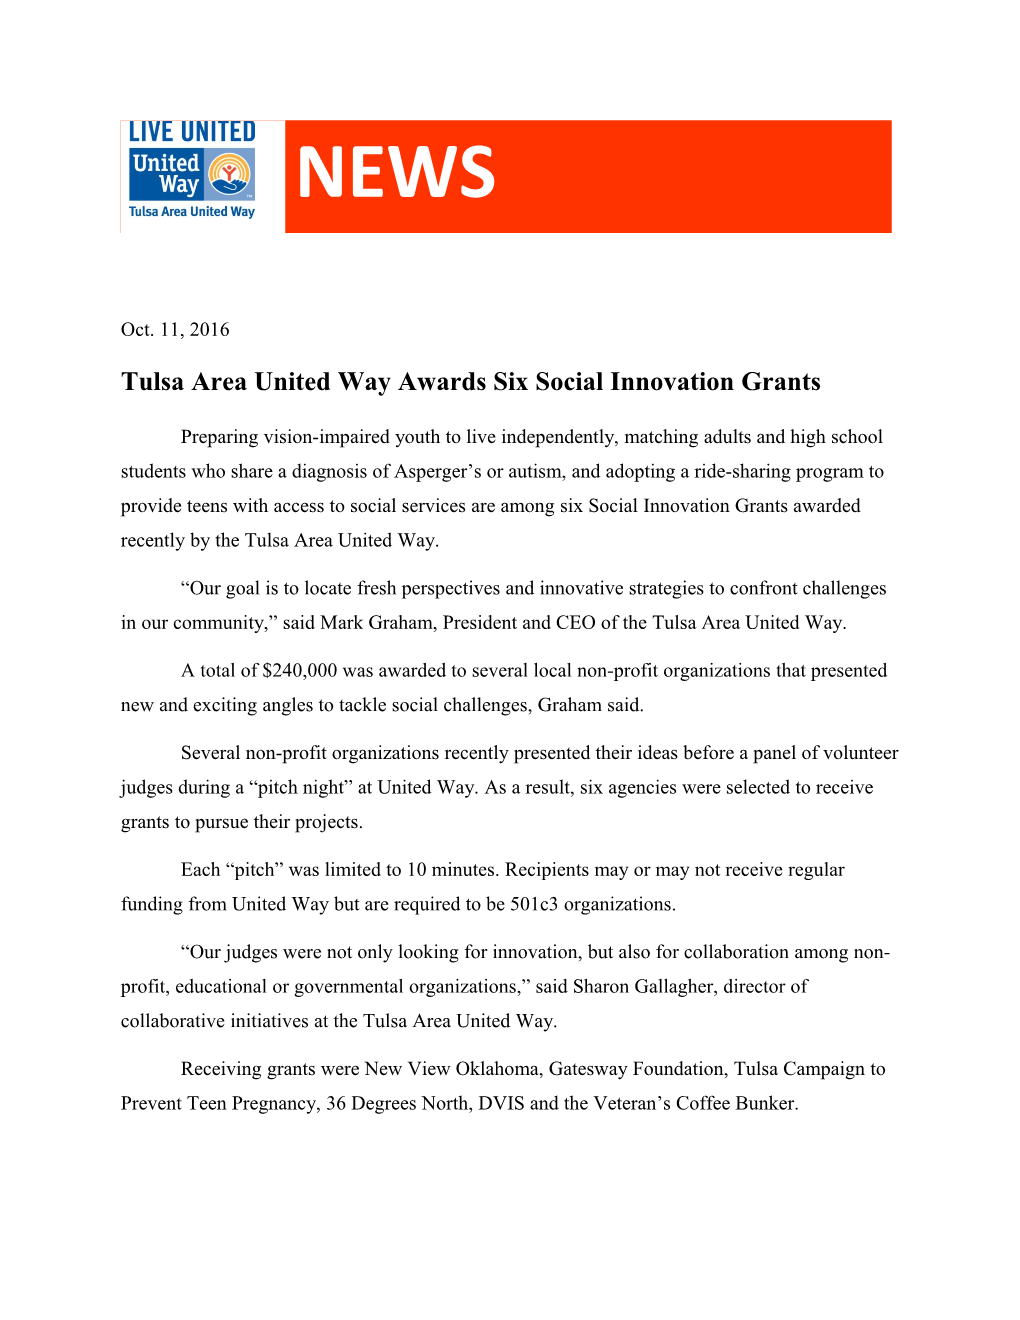 Tulsa Area United Way Awards Six Social Innovation Grants